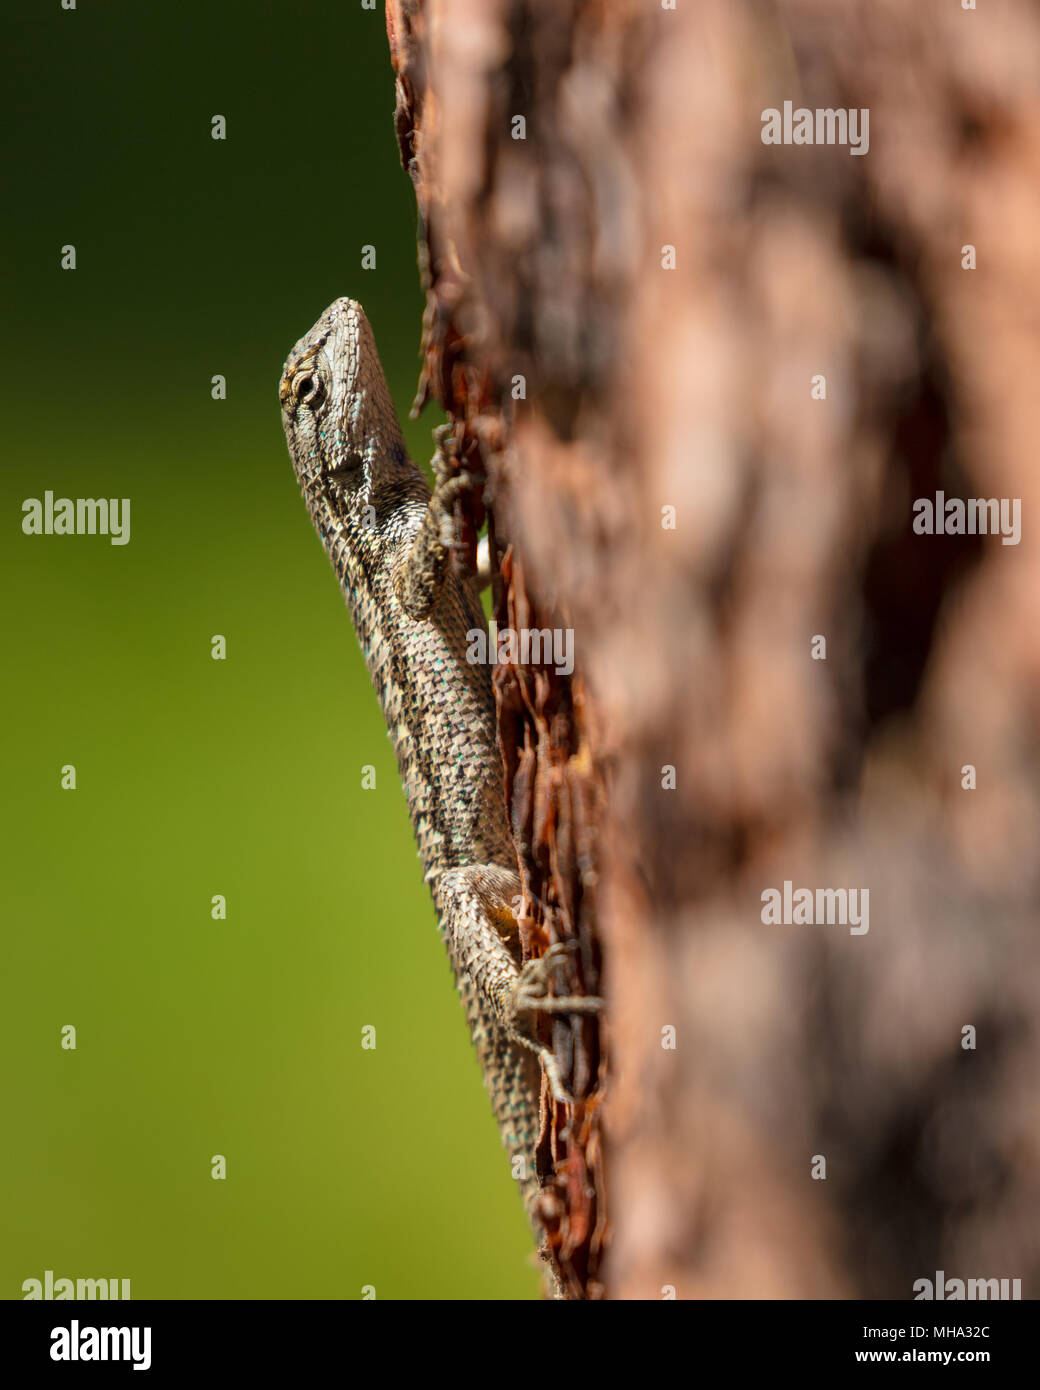 lizard climbing tree Stock Photo